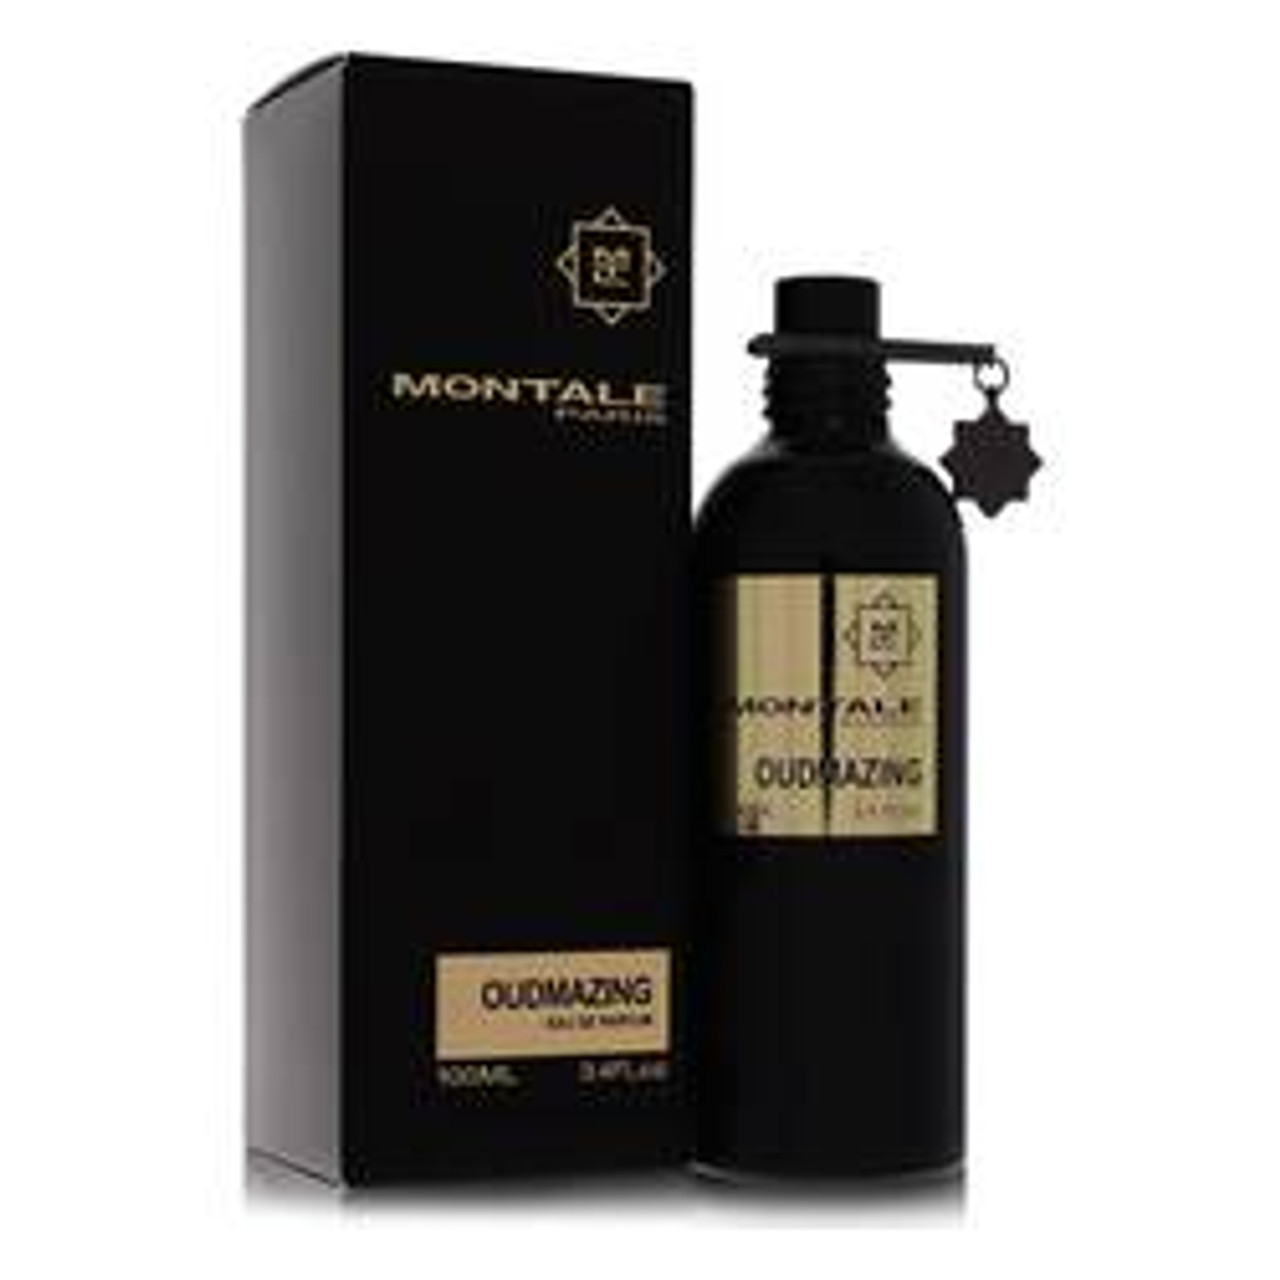 Montale Oudmazing Perfume By Montale Eau De Parfum Spray 3.4 oz for Women - *Pre-Order